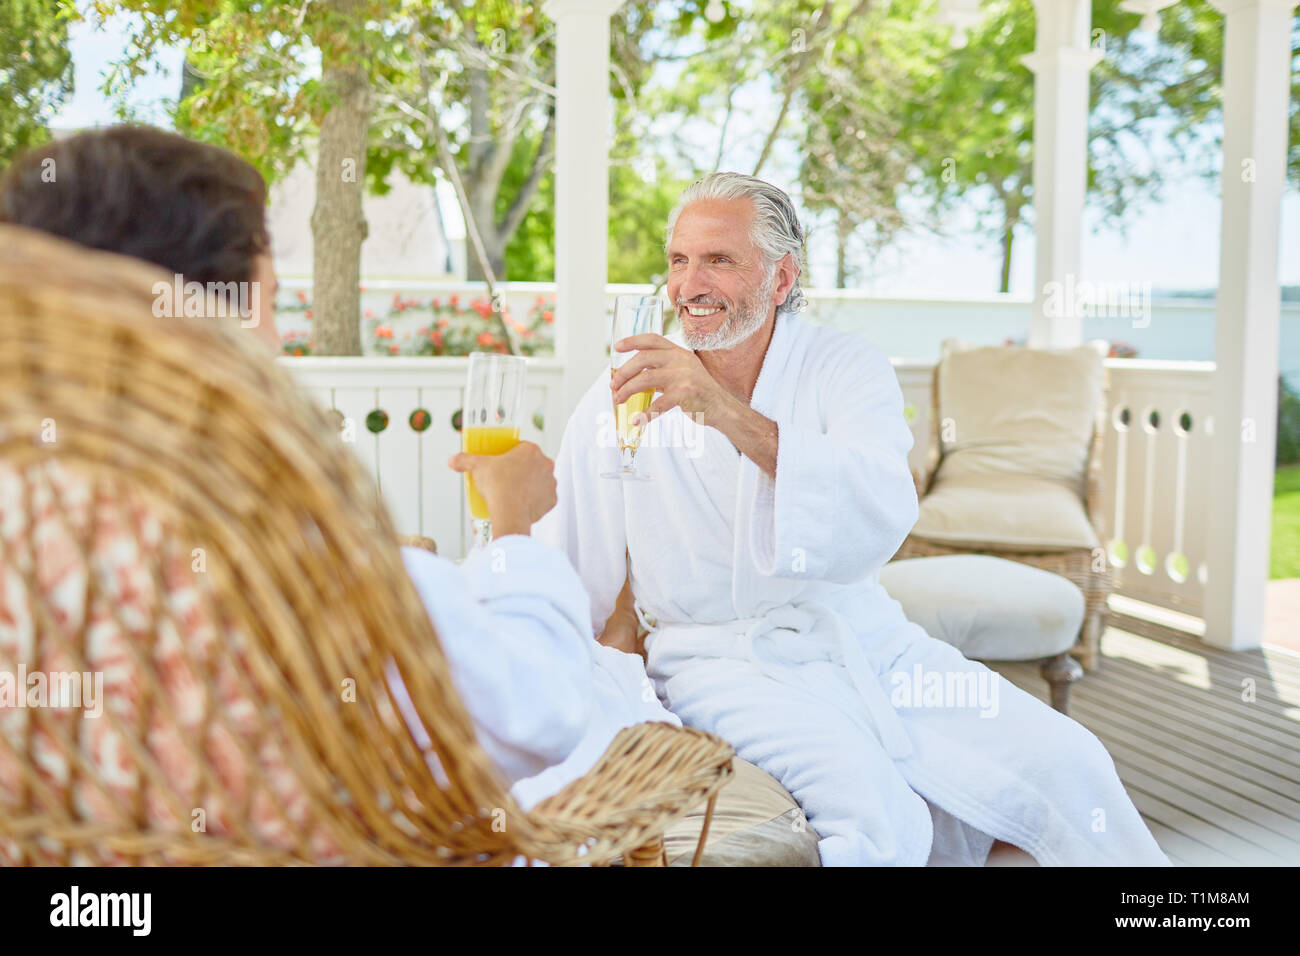 Mature couple in spa bathrobes drinking mimosas in resort gazebo Stock Photo